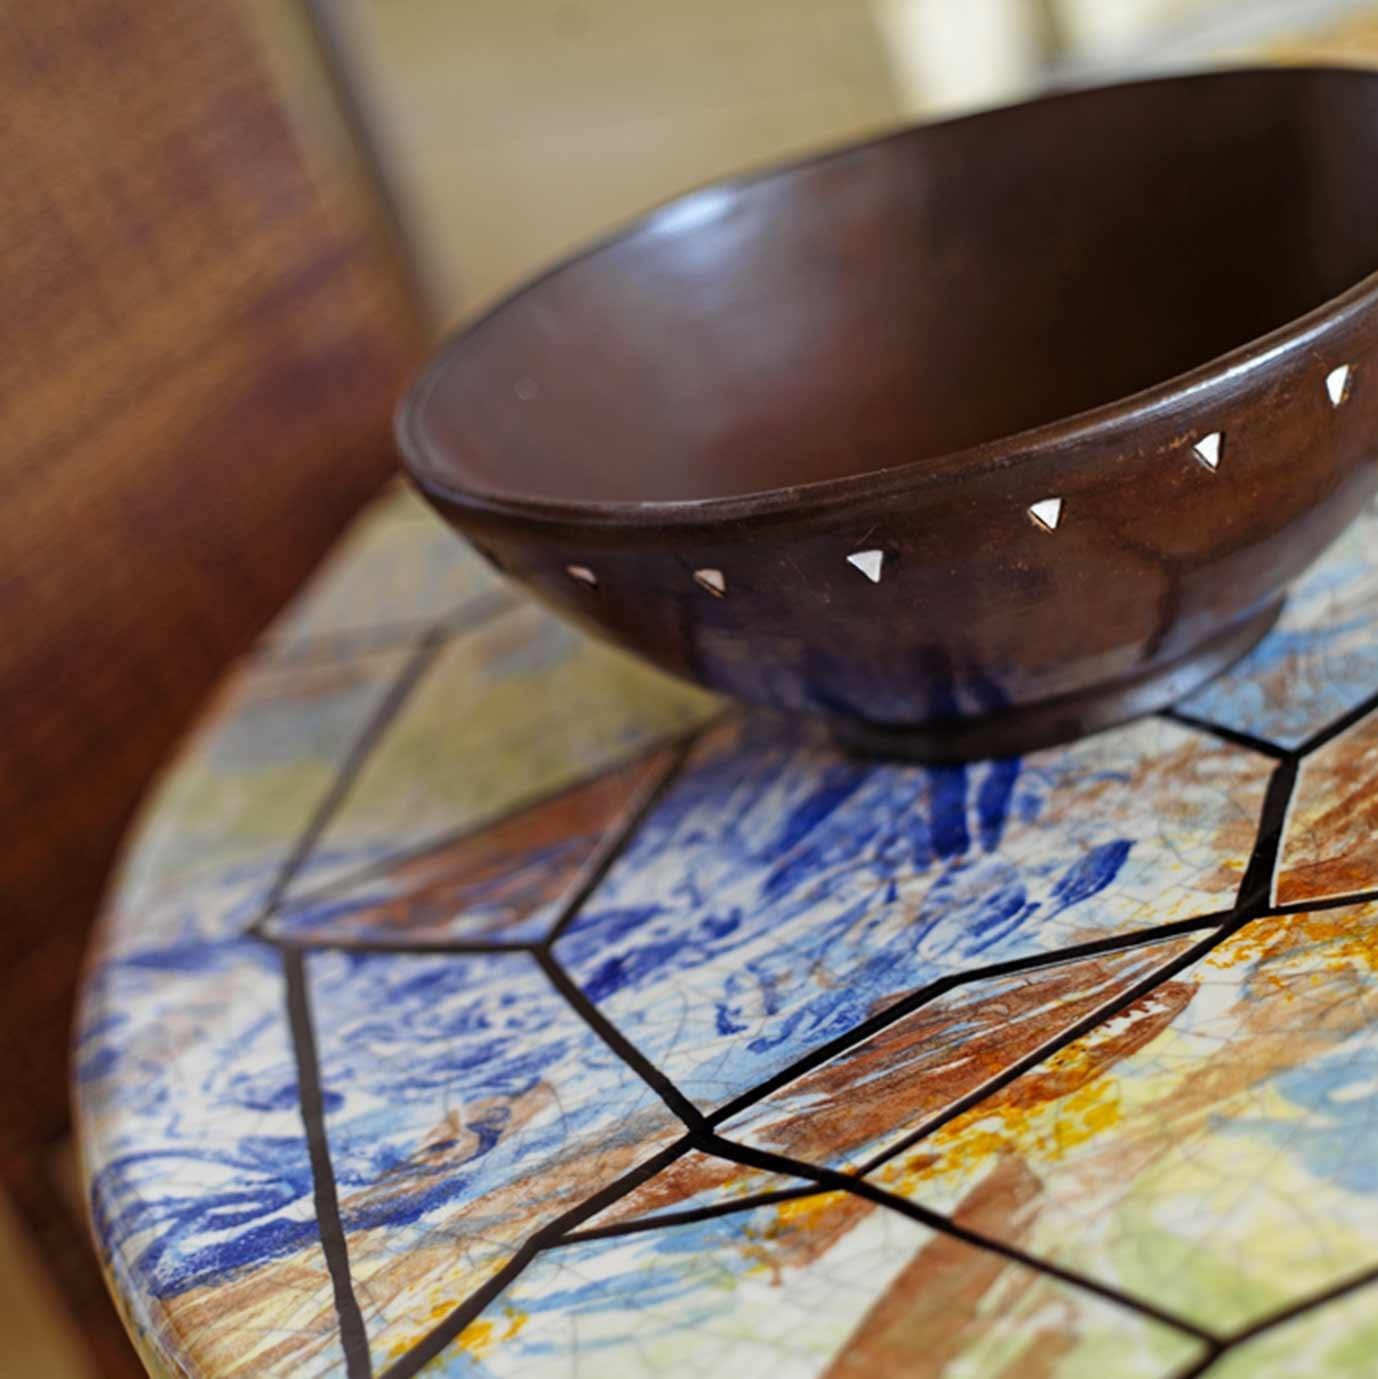 CERAMIC STONE TABLE + IRON BASE: DUBLINO Design - Hand Painted in Deruta, Italy. - Artistica.com